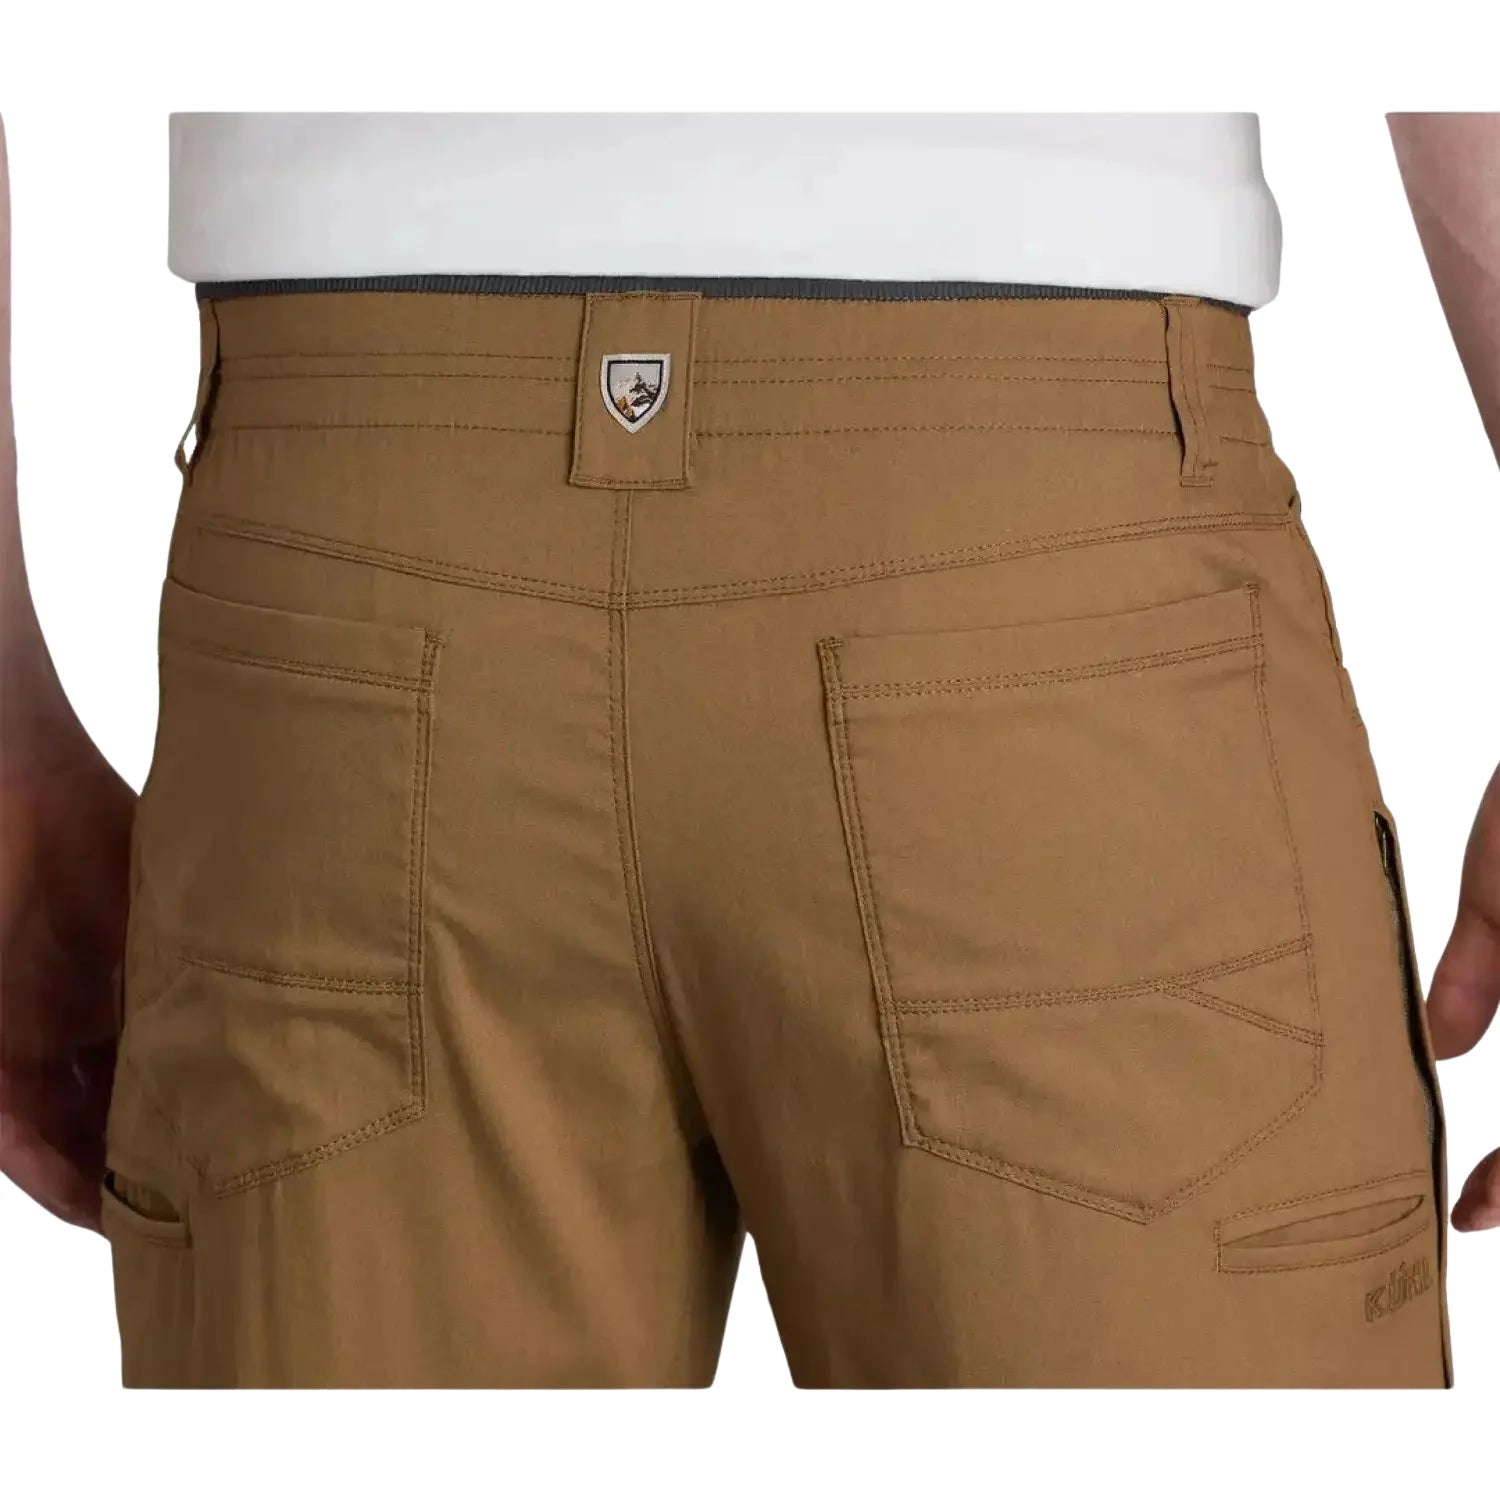 KÜHL Men's RESISTOR™ AIR Pants shown in the Dark Khaki color option. Back view.